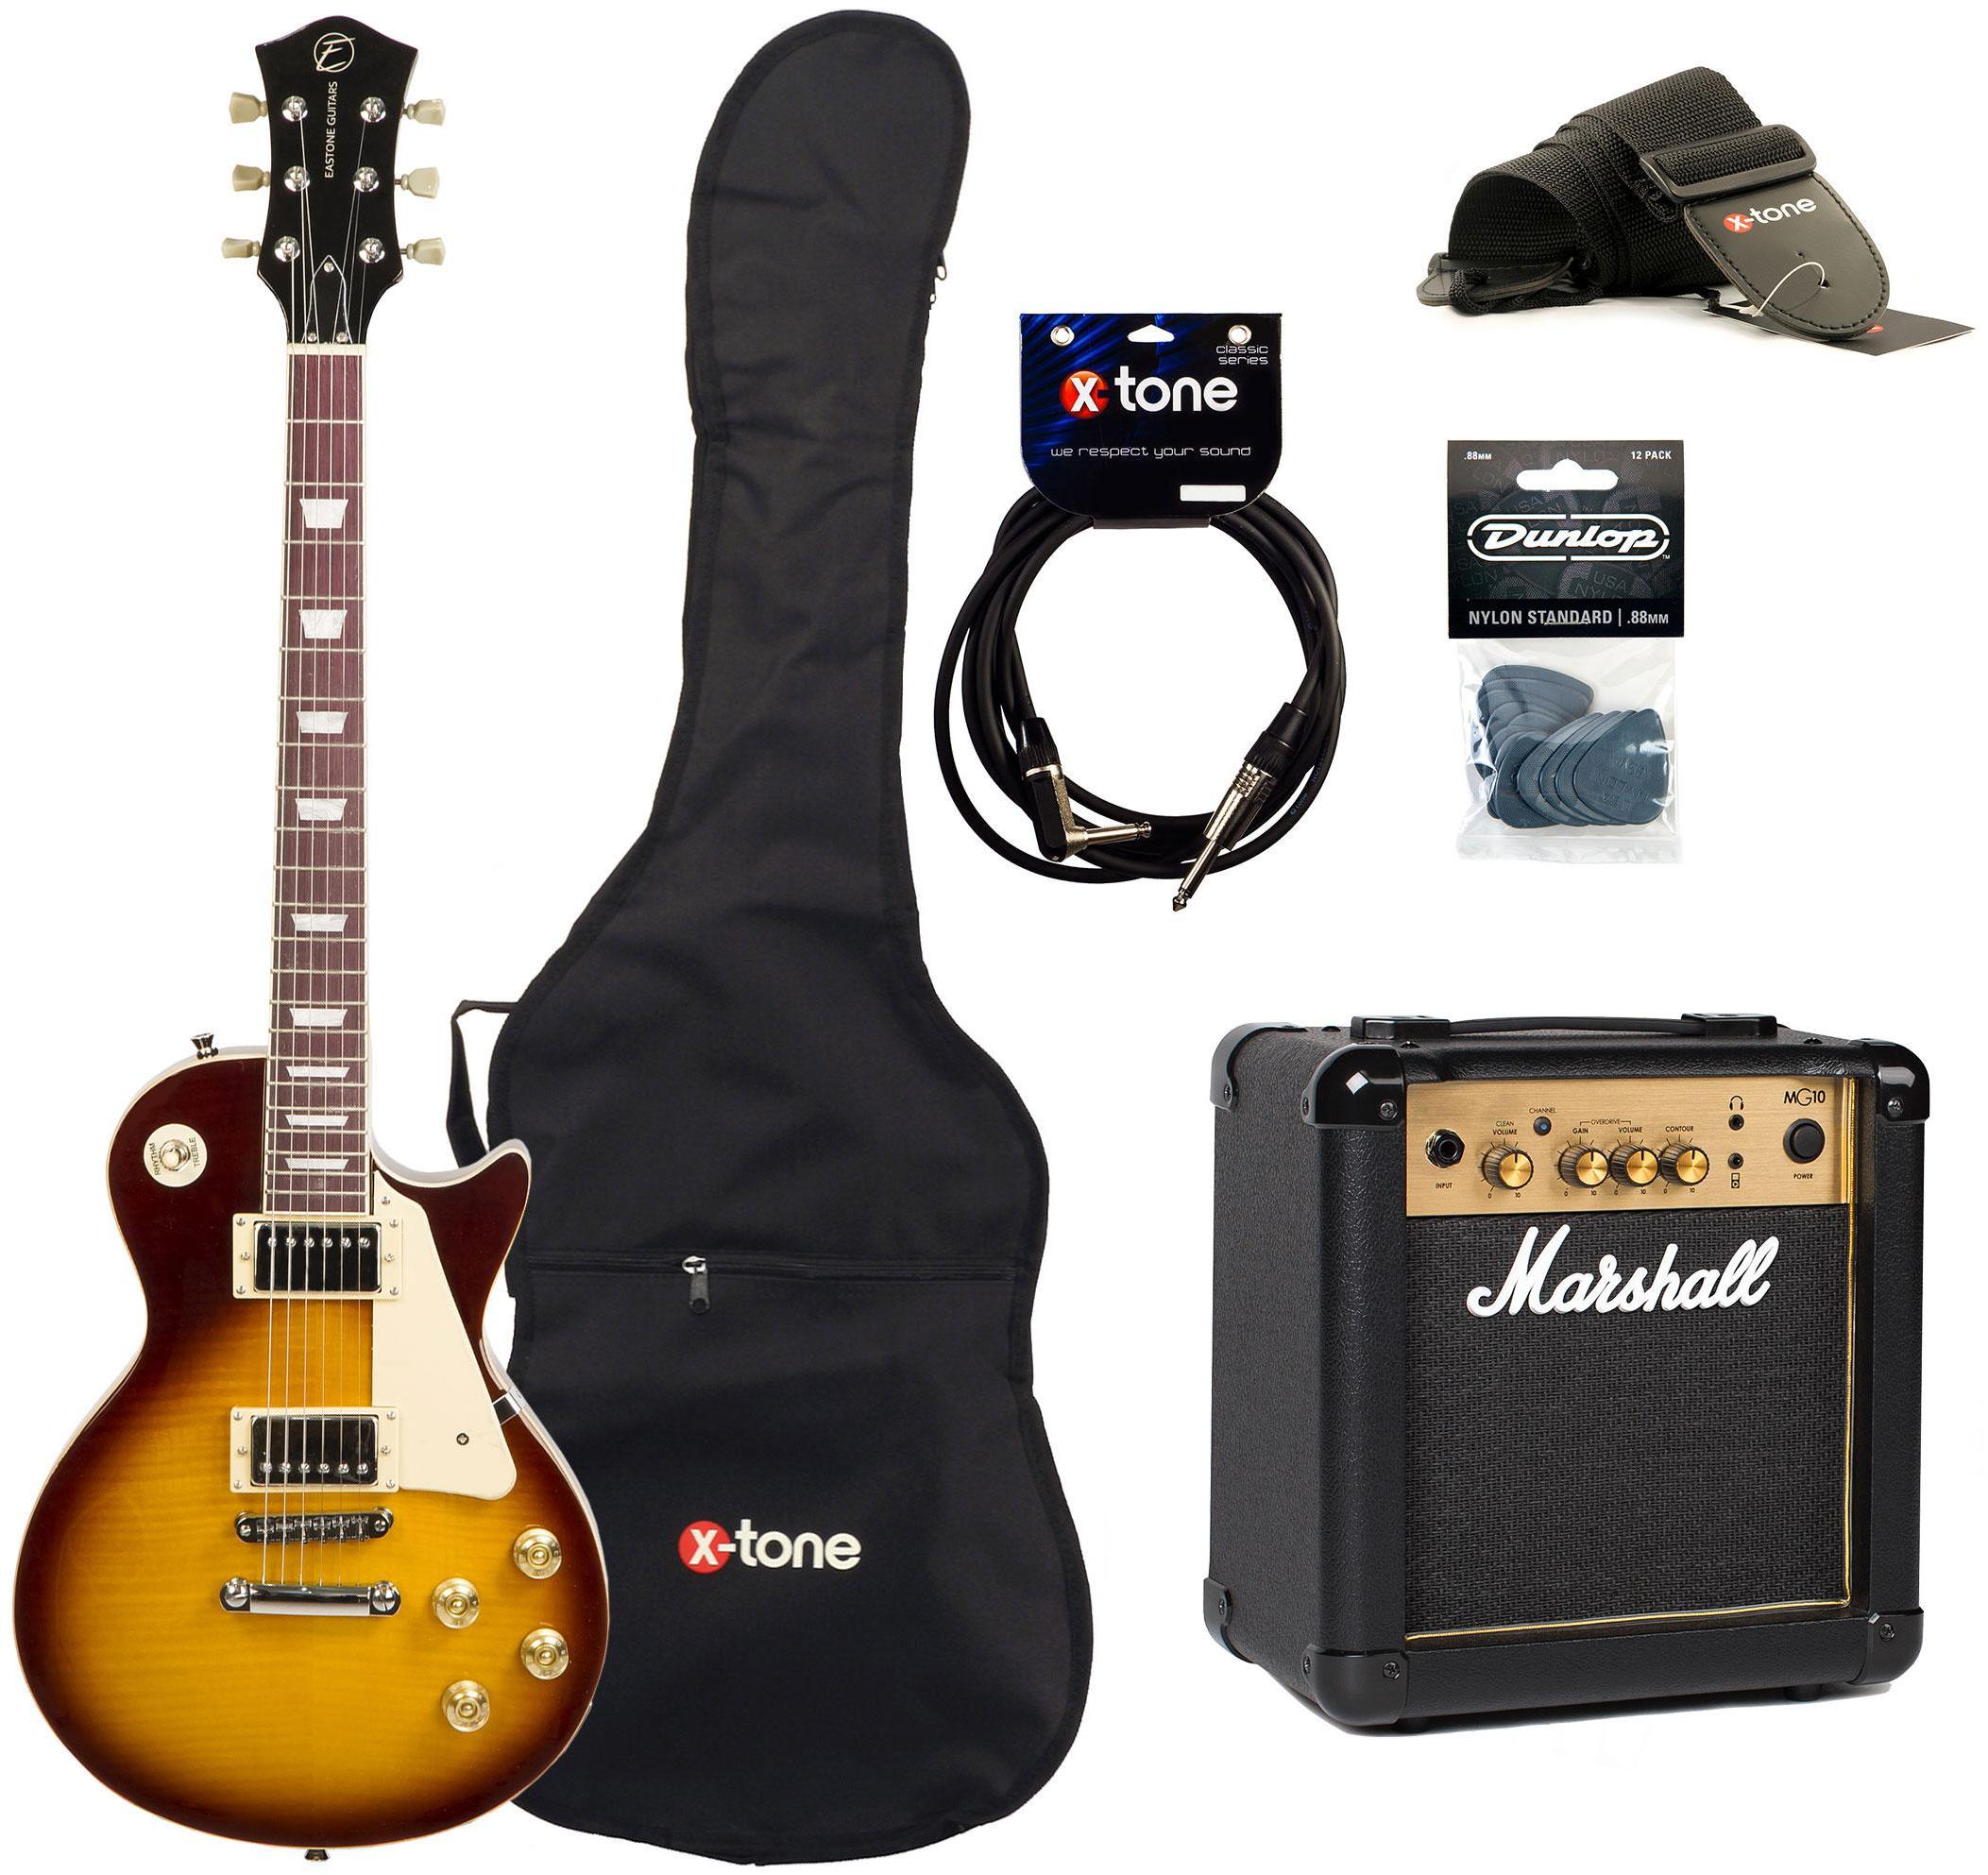 Elektrische gitaar set Eastone LP200 HB +MARSHALL MG10 10W +CABLE +MEDIATORS +HOUSSE - Honey sunburst